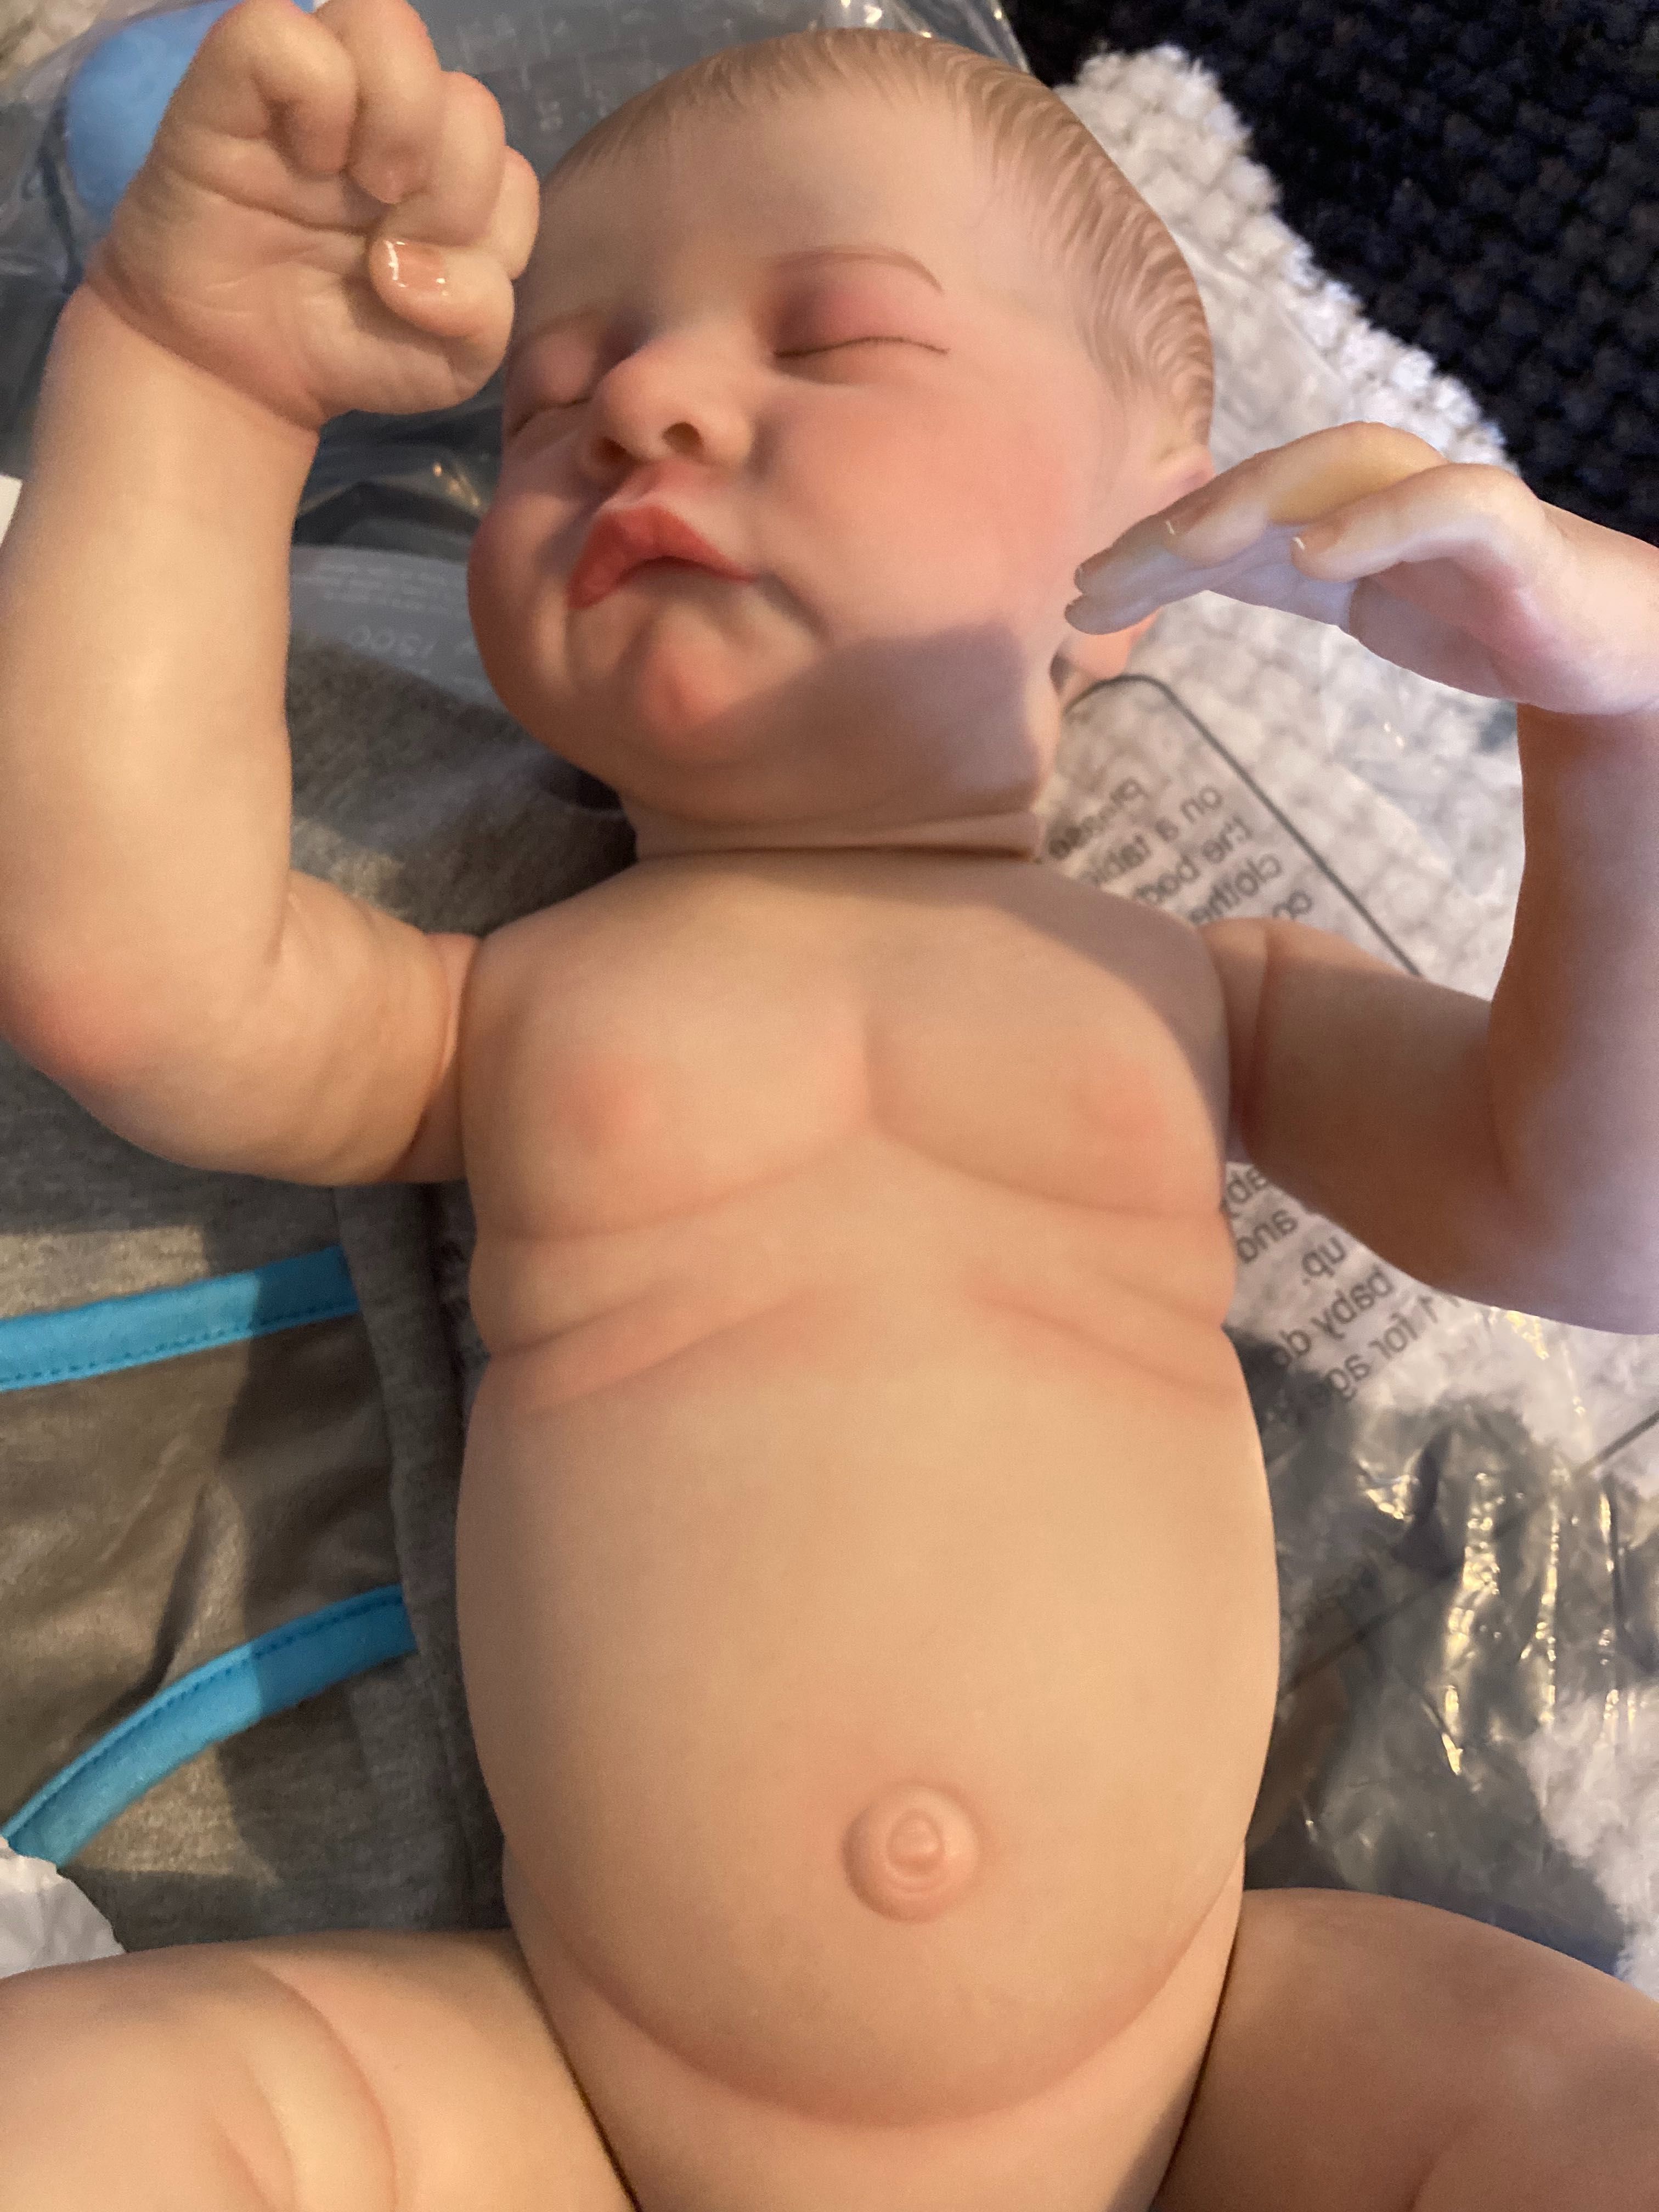 Papusa bebelus Reborn realist fetita  baietel corp silicon sau textil